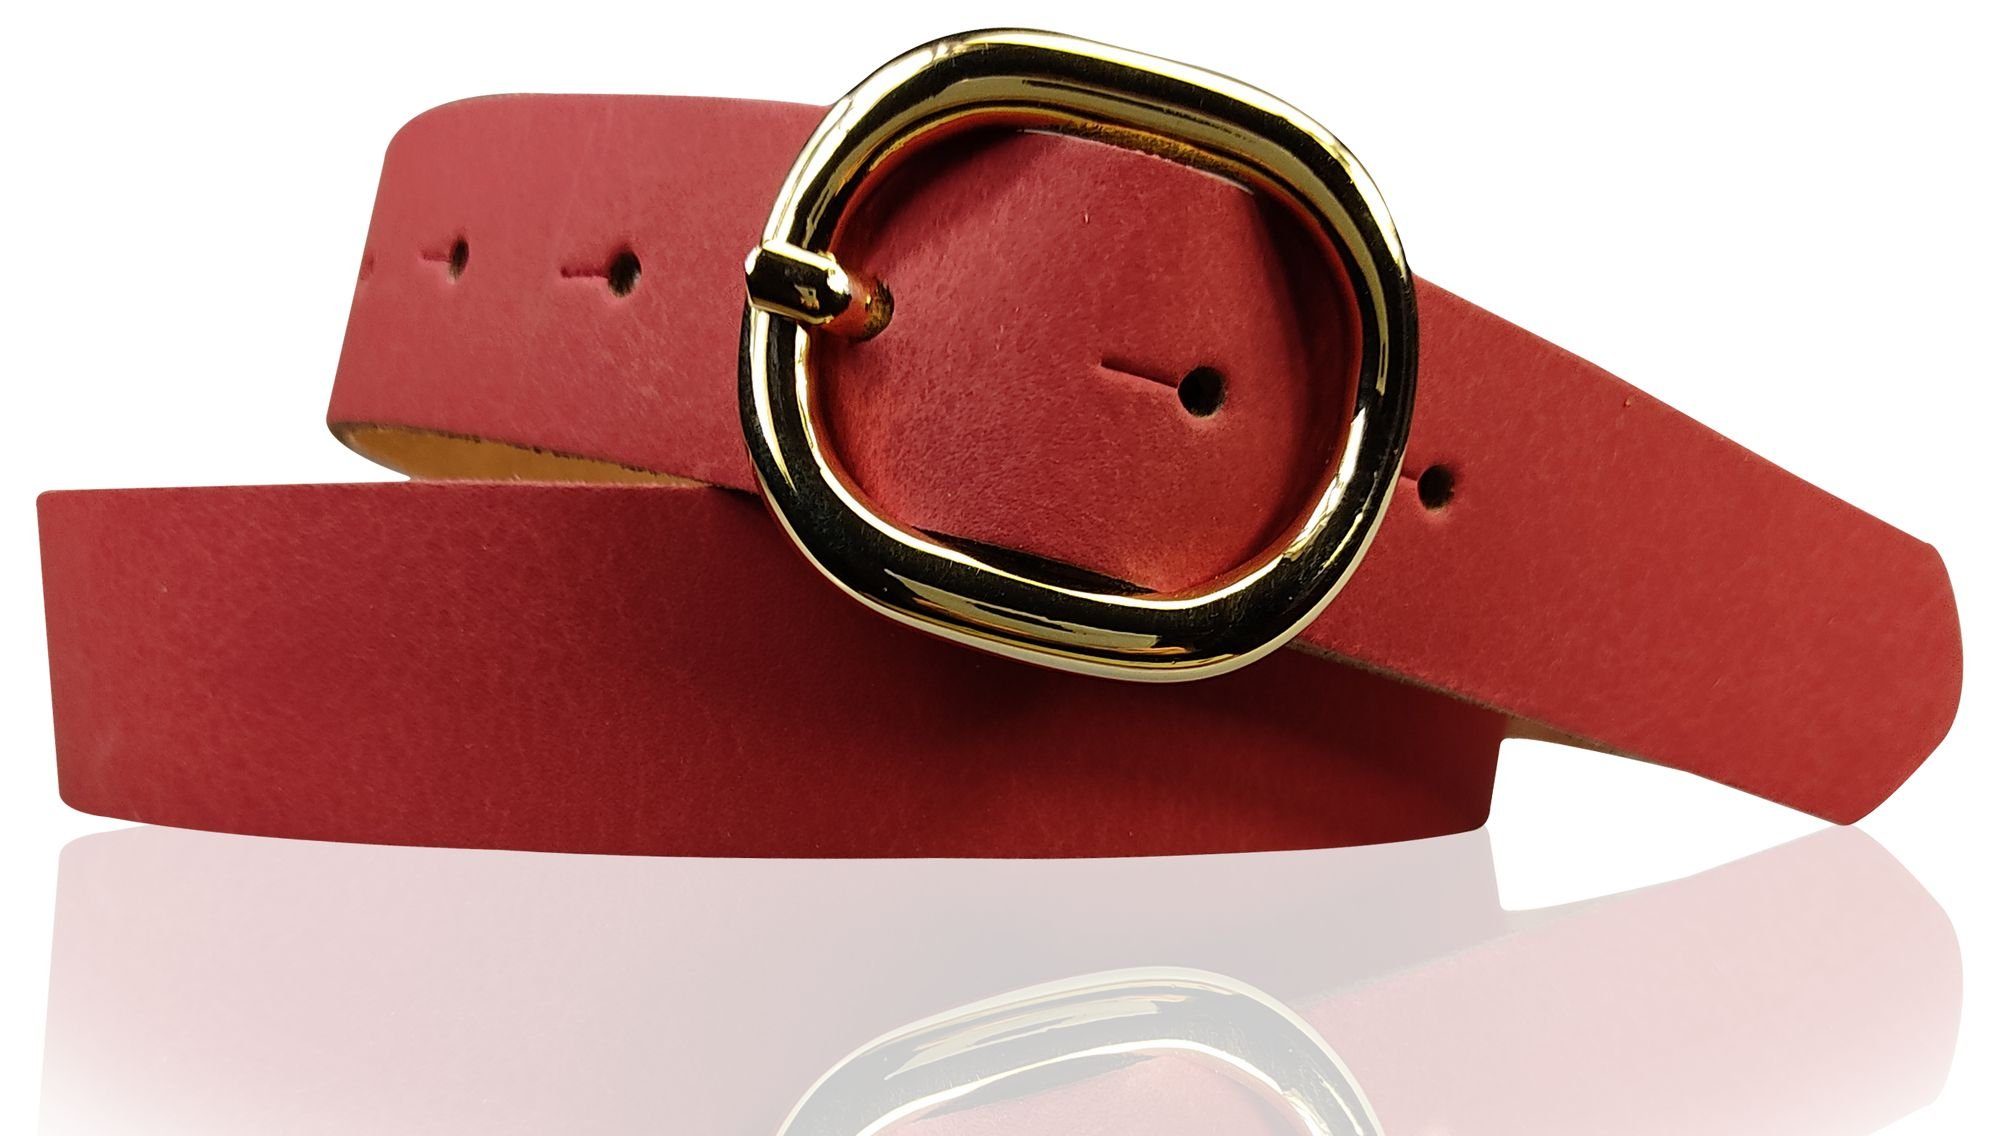 FRONHOFER Hüftgürtel 18621 Damengürtel 3 cm goldene ovale Schnalle, echt Ledergürtel plastikfrei Rot